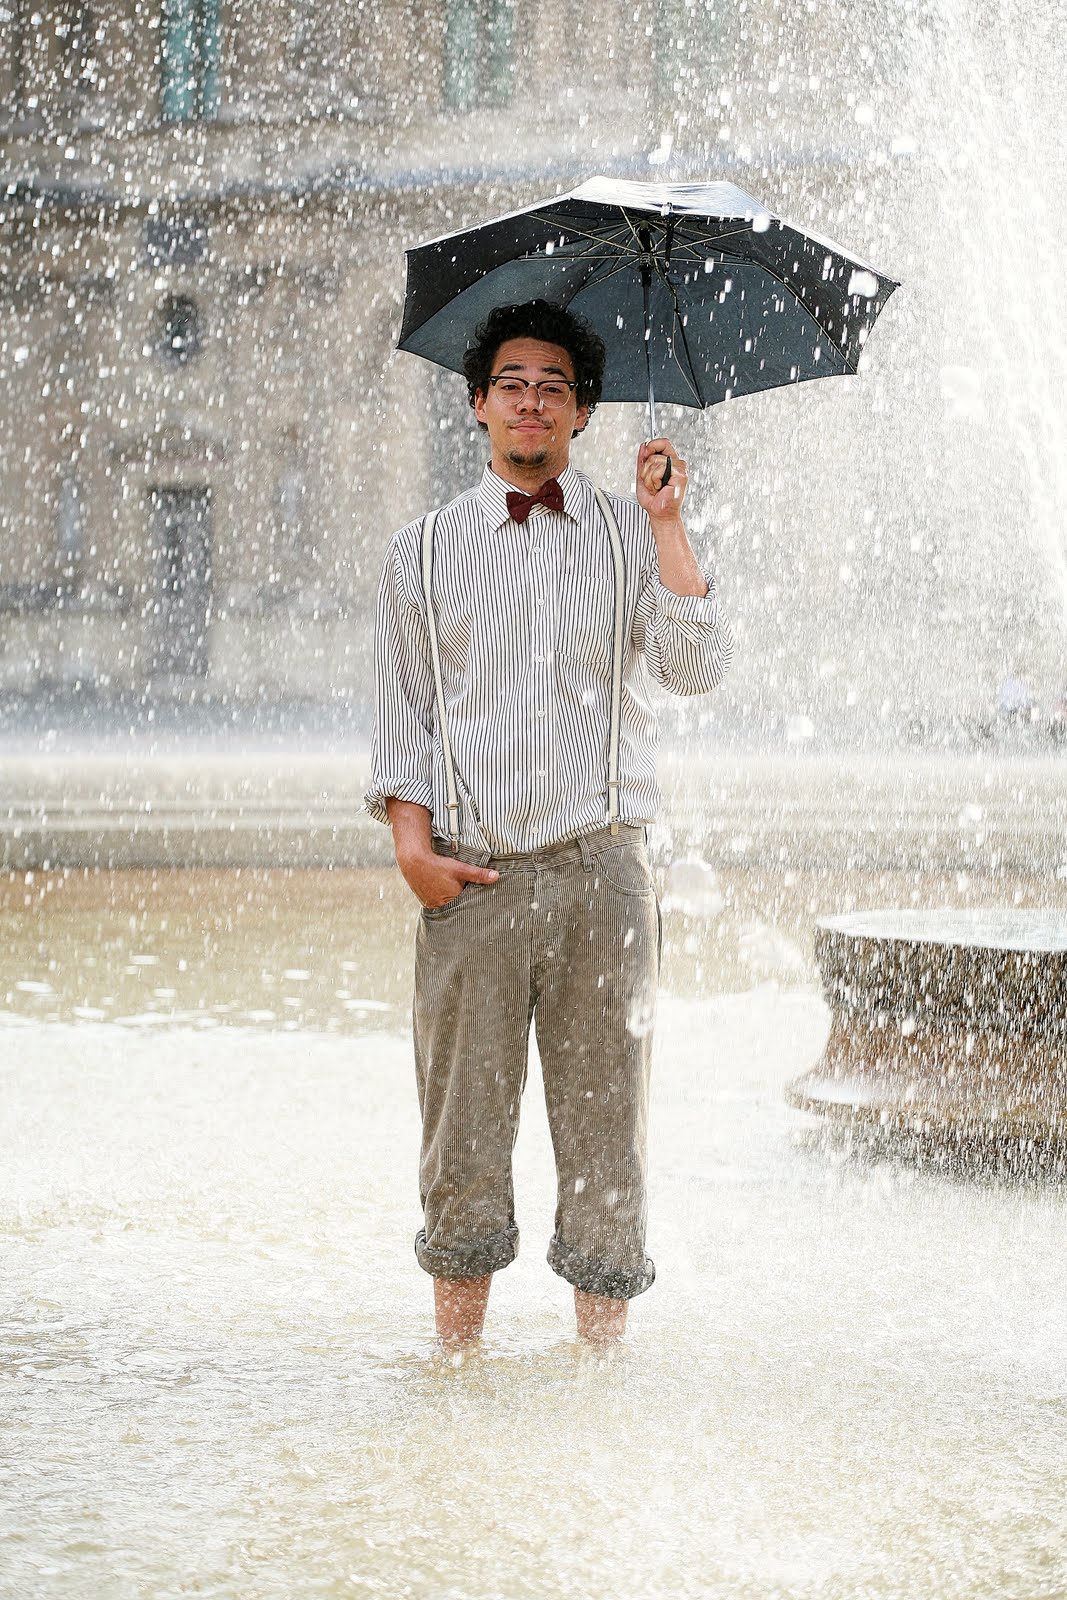 Raining man geri. Singing in the Rain. It's been raining. Фото парень на заднем дождливый день. Ben l'oncle Soul.